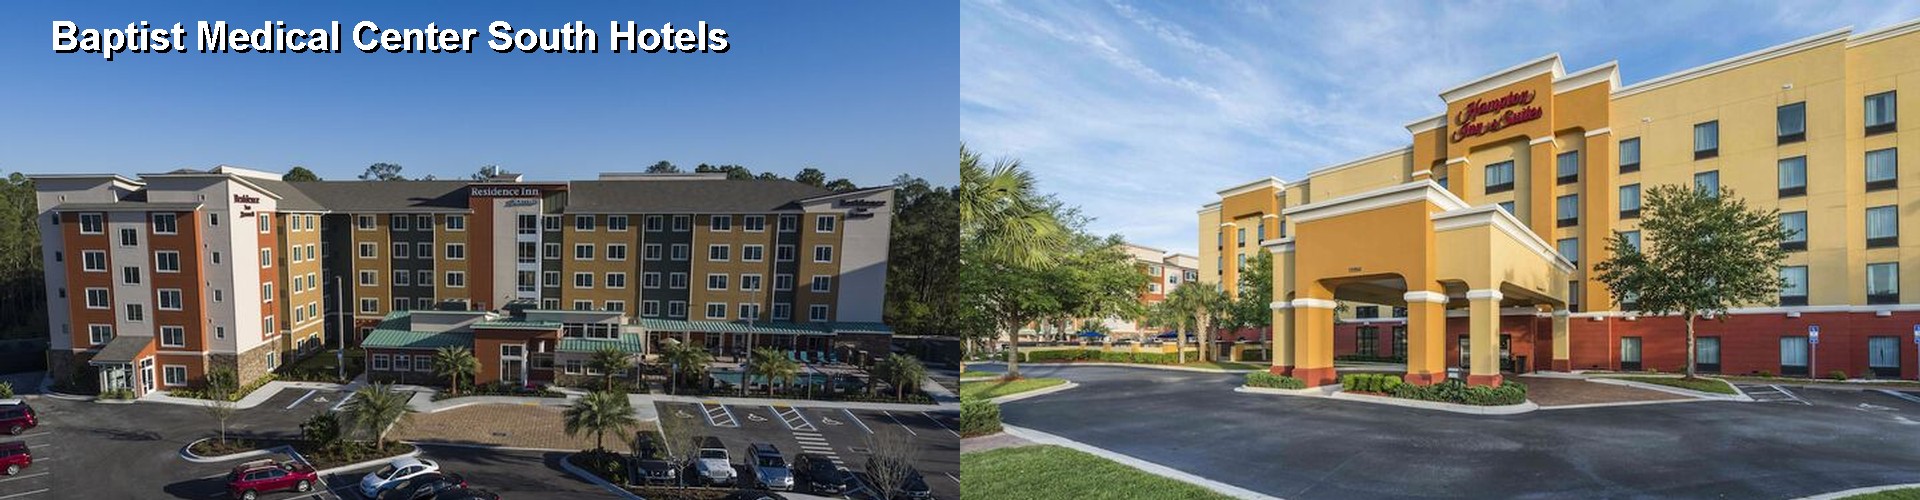 5 Best Hotels near Baptist Medical Center South